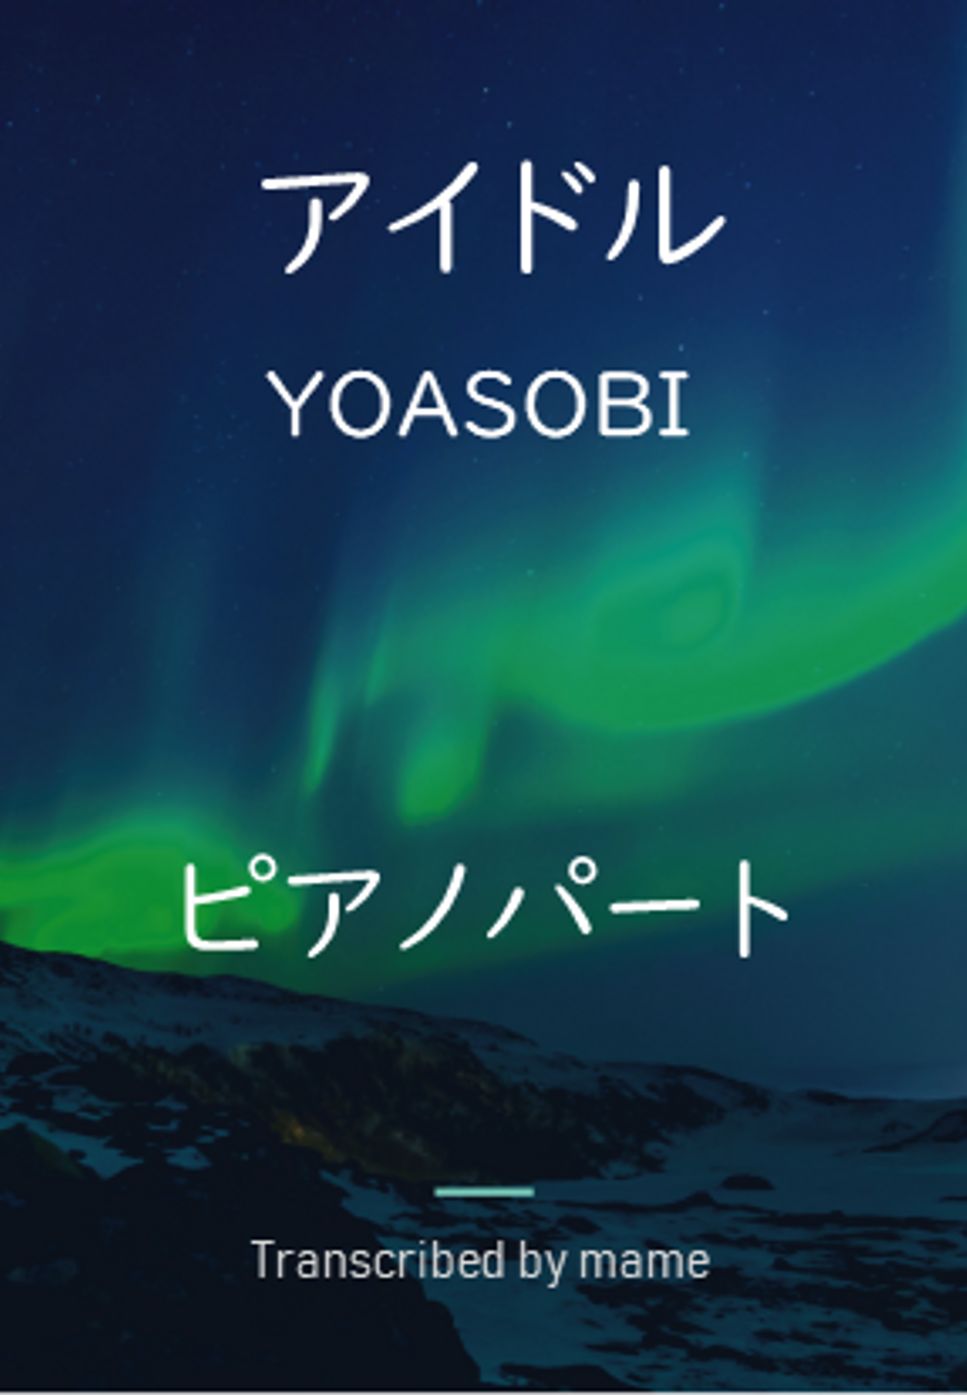 YOASOBI - アイドル (keyboard part) by mame